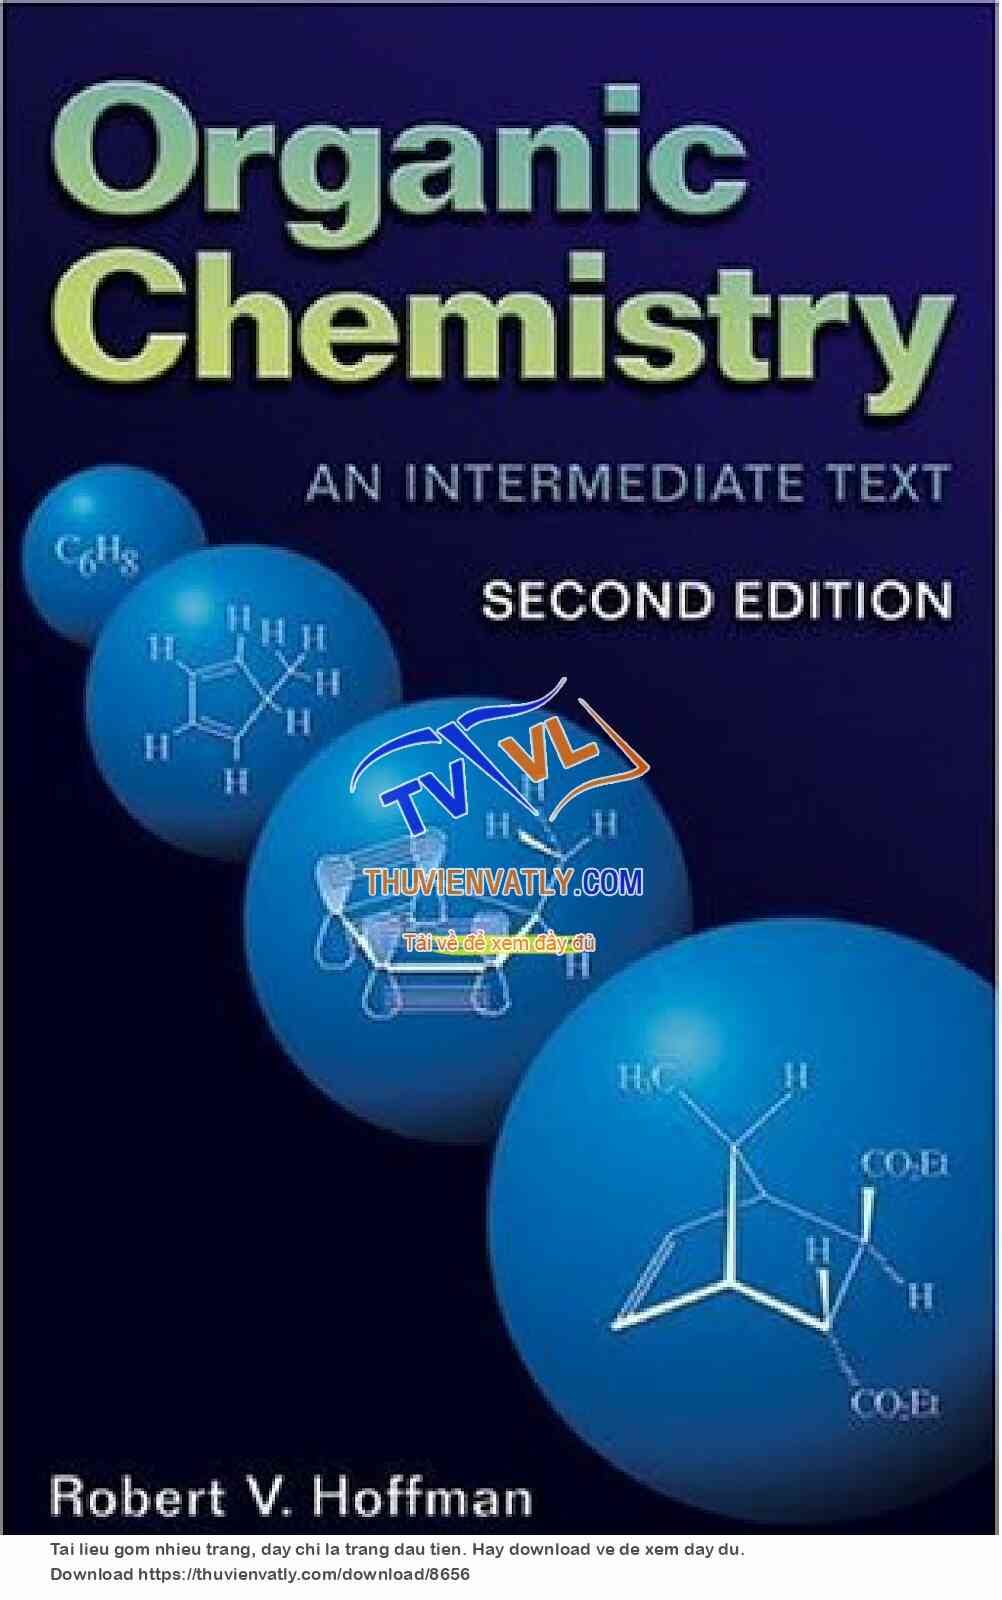 Organic Chemistry - an Intermediate Text 2nd ed - R. Hoffman